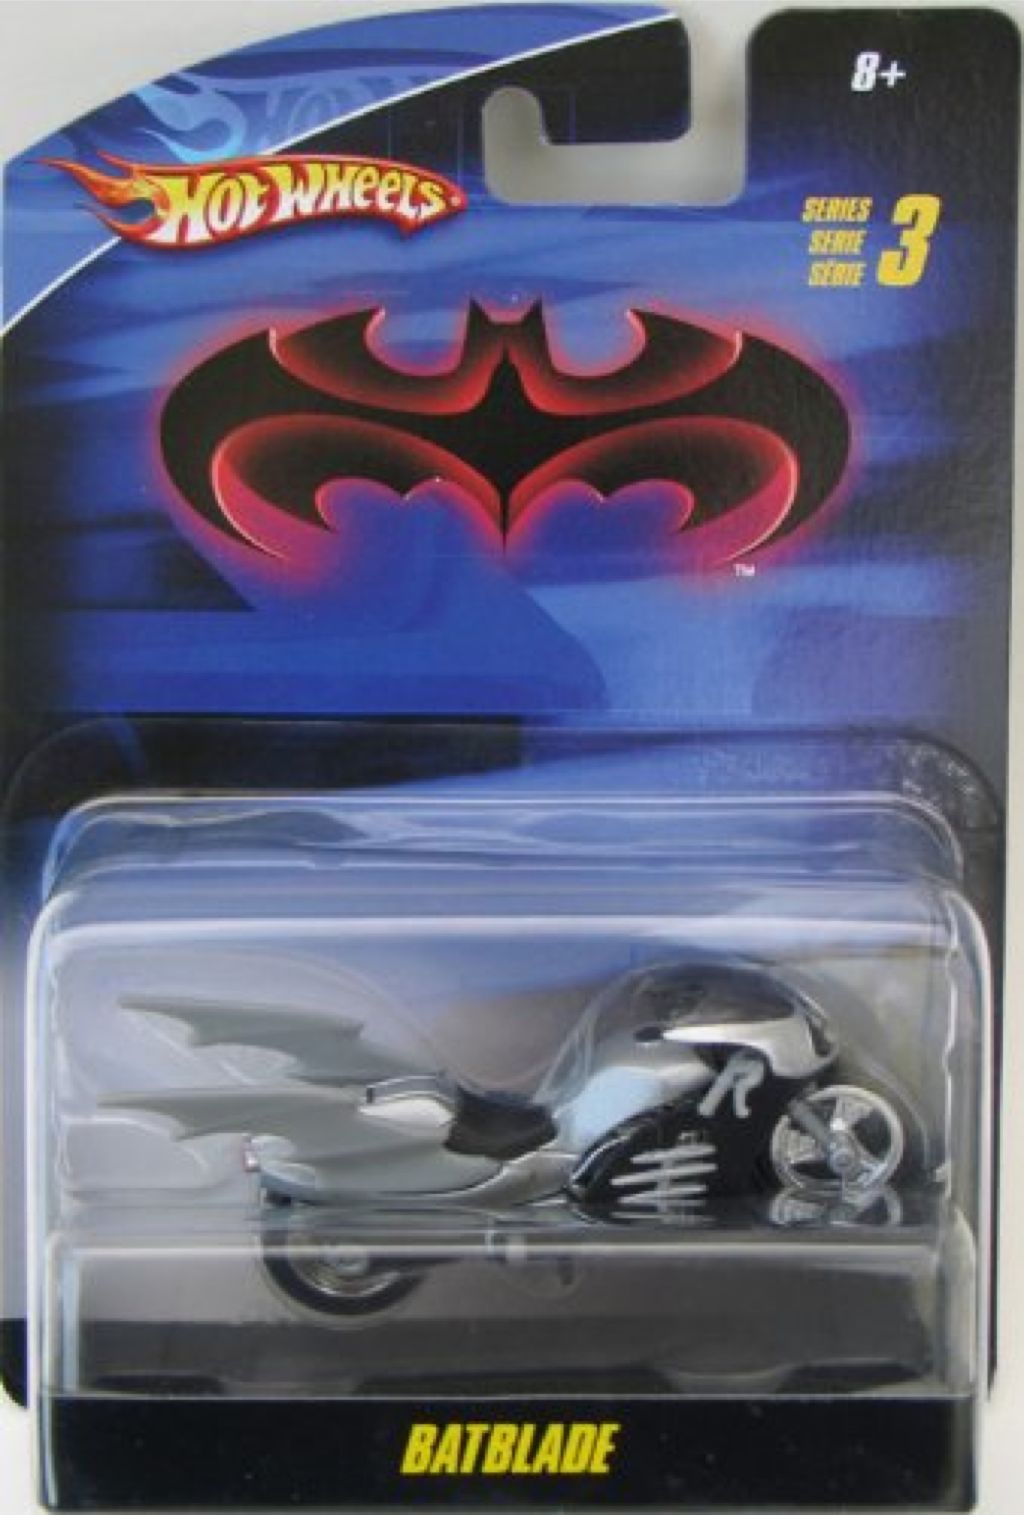 Batman™ & Robin Movie Batblade 1:50 Scale - Batman & Robin The Movie toy car collectible [Barcode 027084828344] - Main Image 2